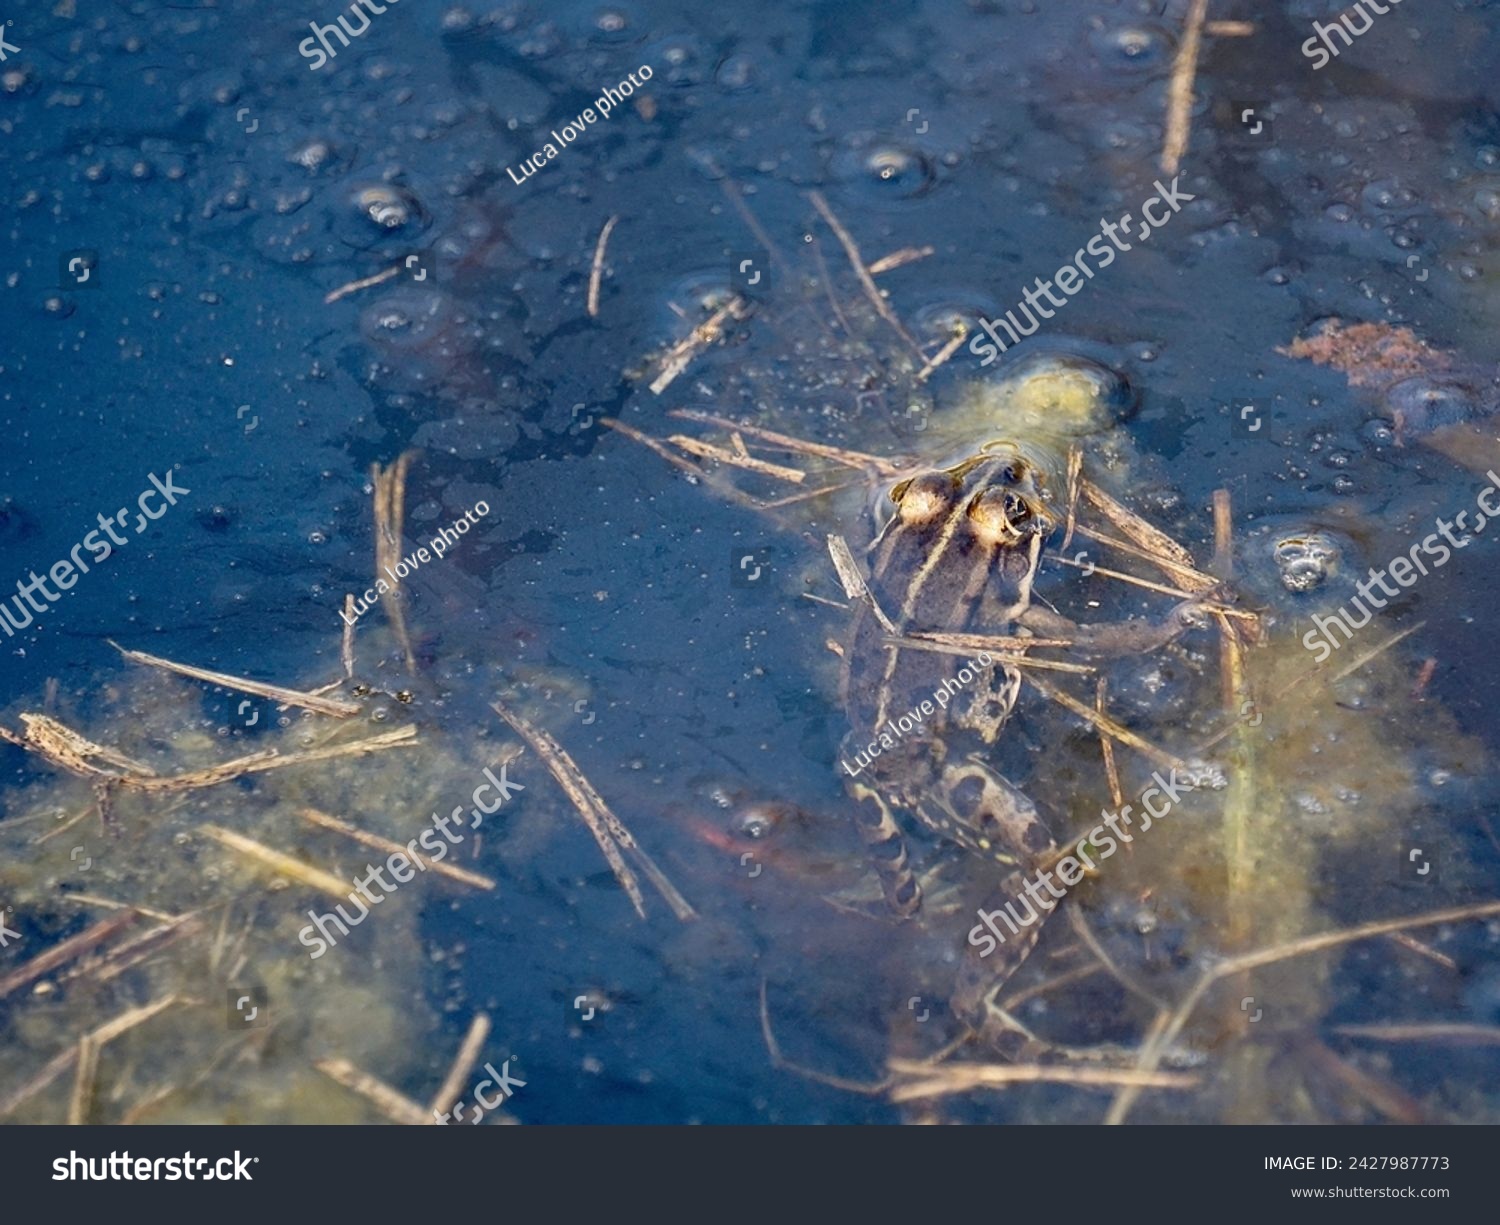 Ecology and behavior of Pelophylax ridibundus: The Marsh frog, at the pond. Winter season      #2427987773